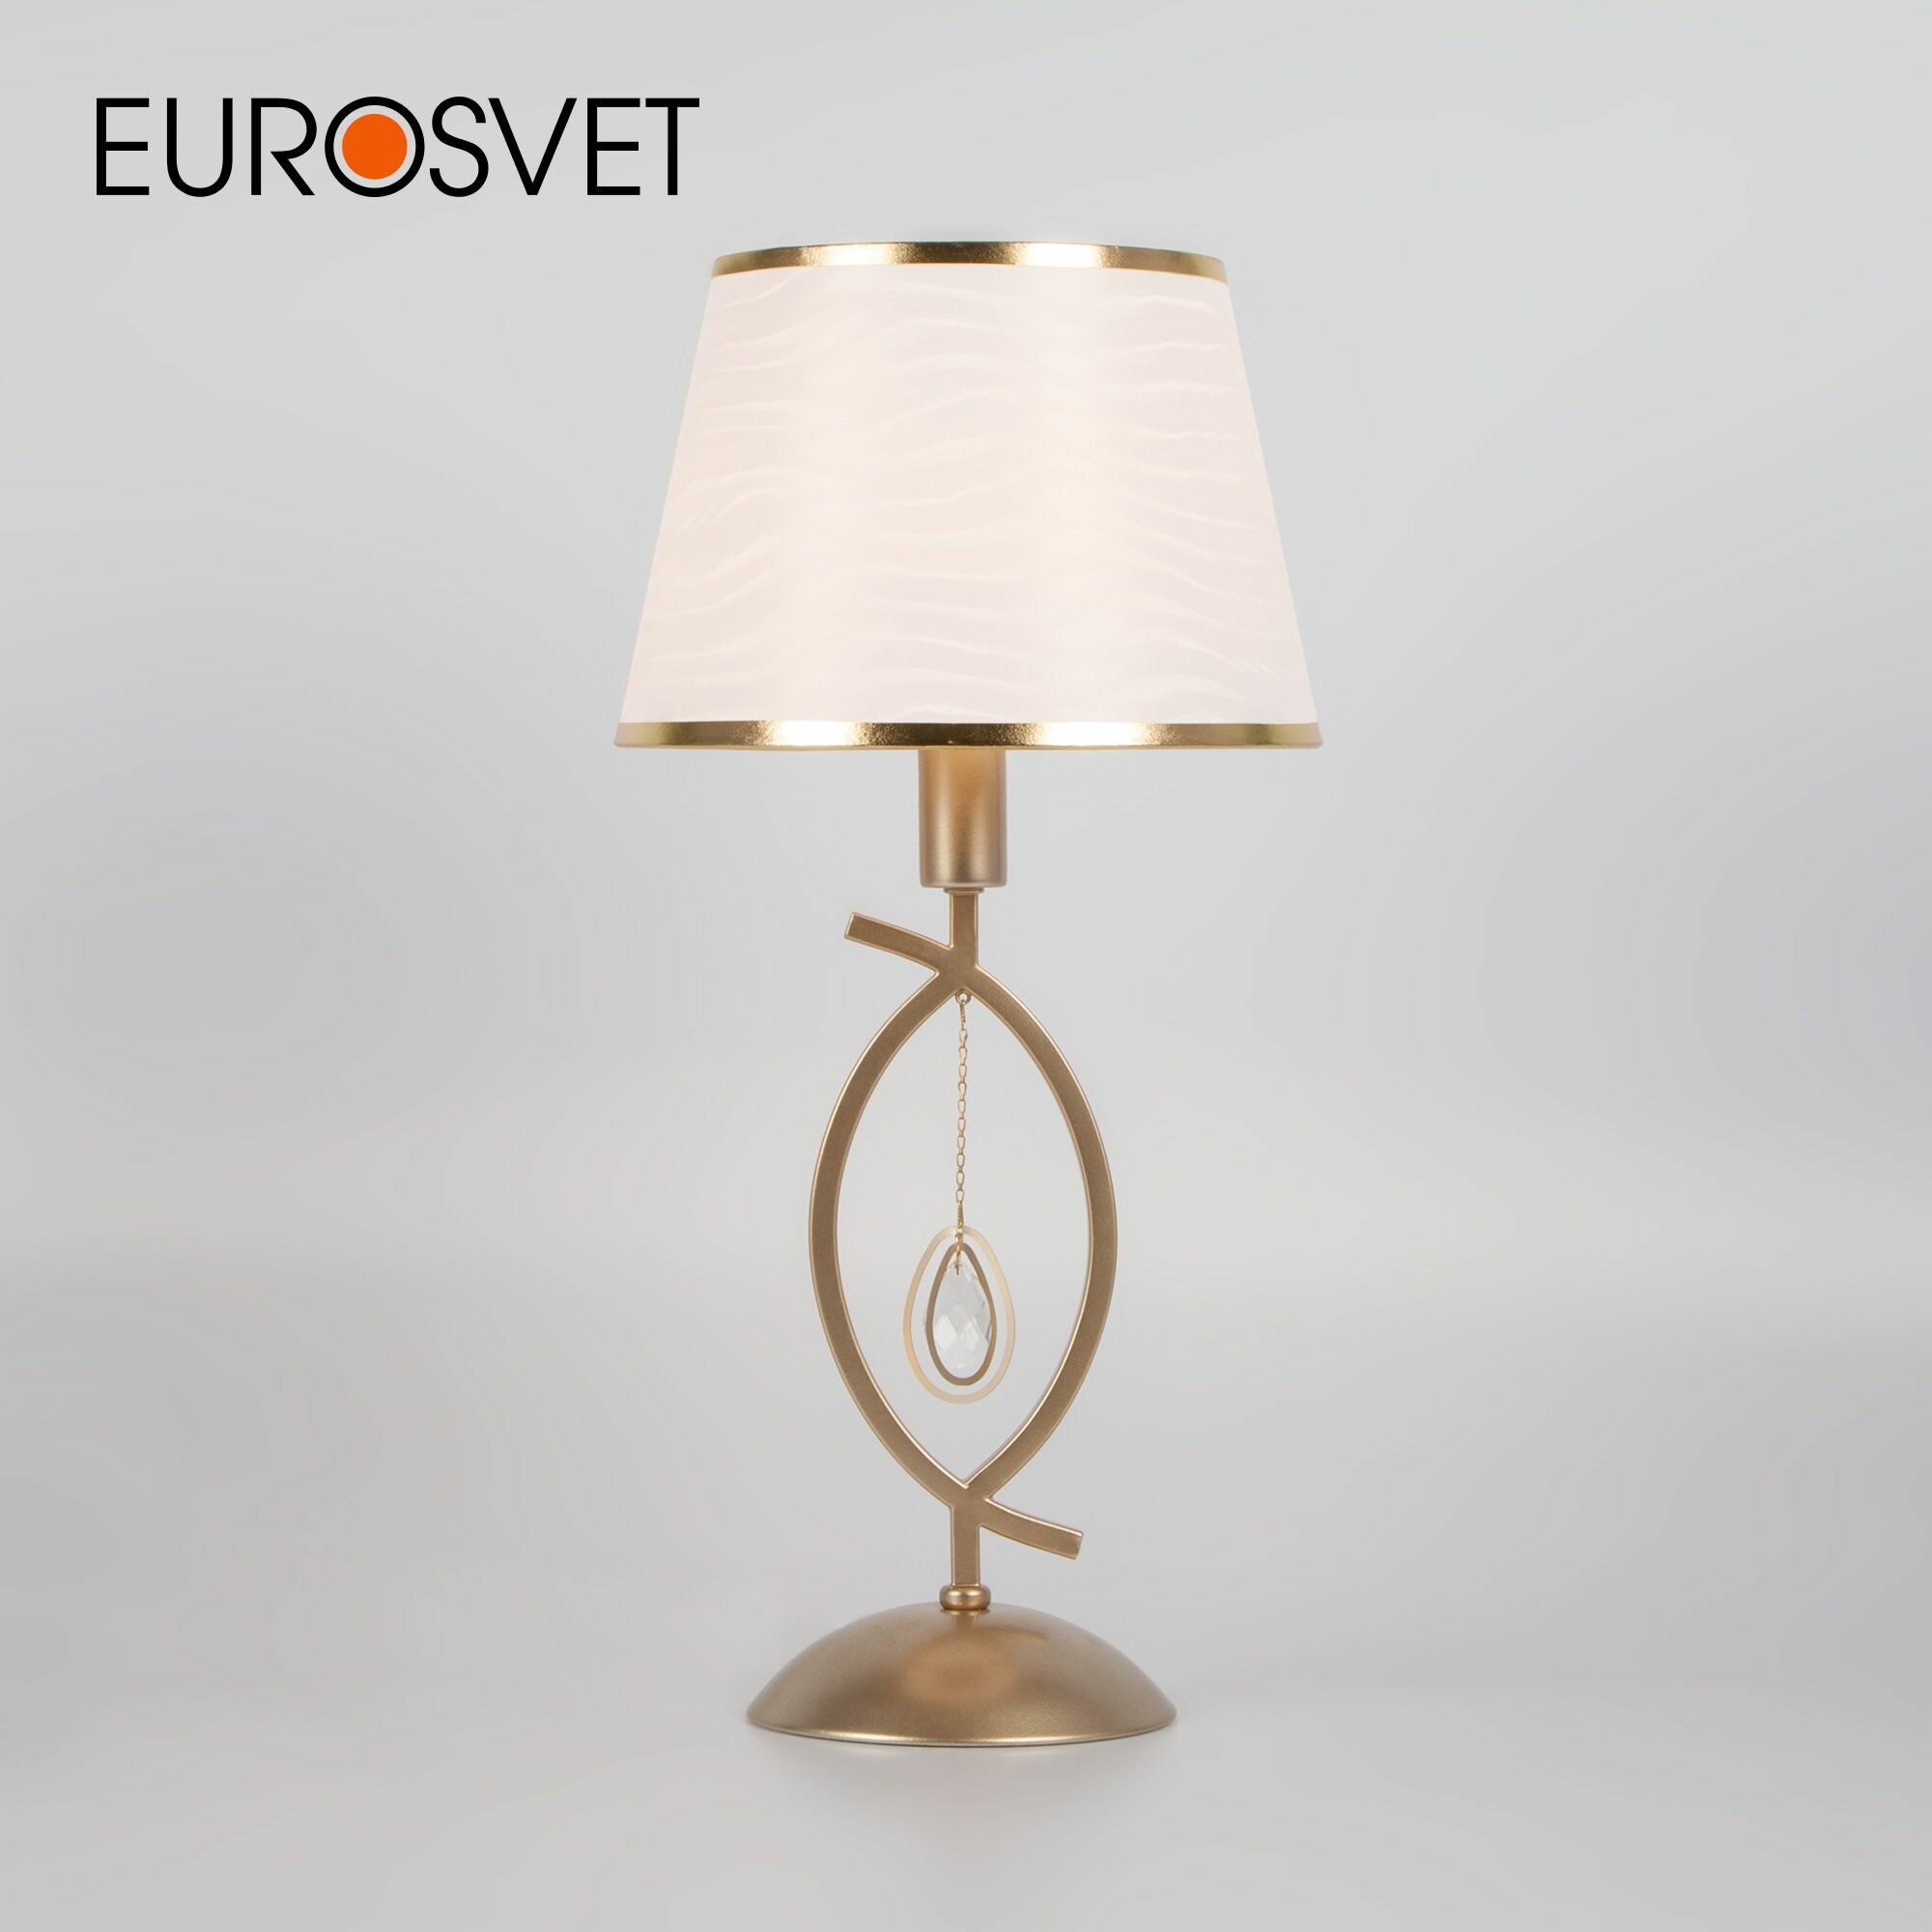 Настольная лампа с тканевым абажуром Eurosvet Salita 01066/1, цвет перламутровое золото